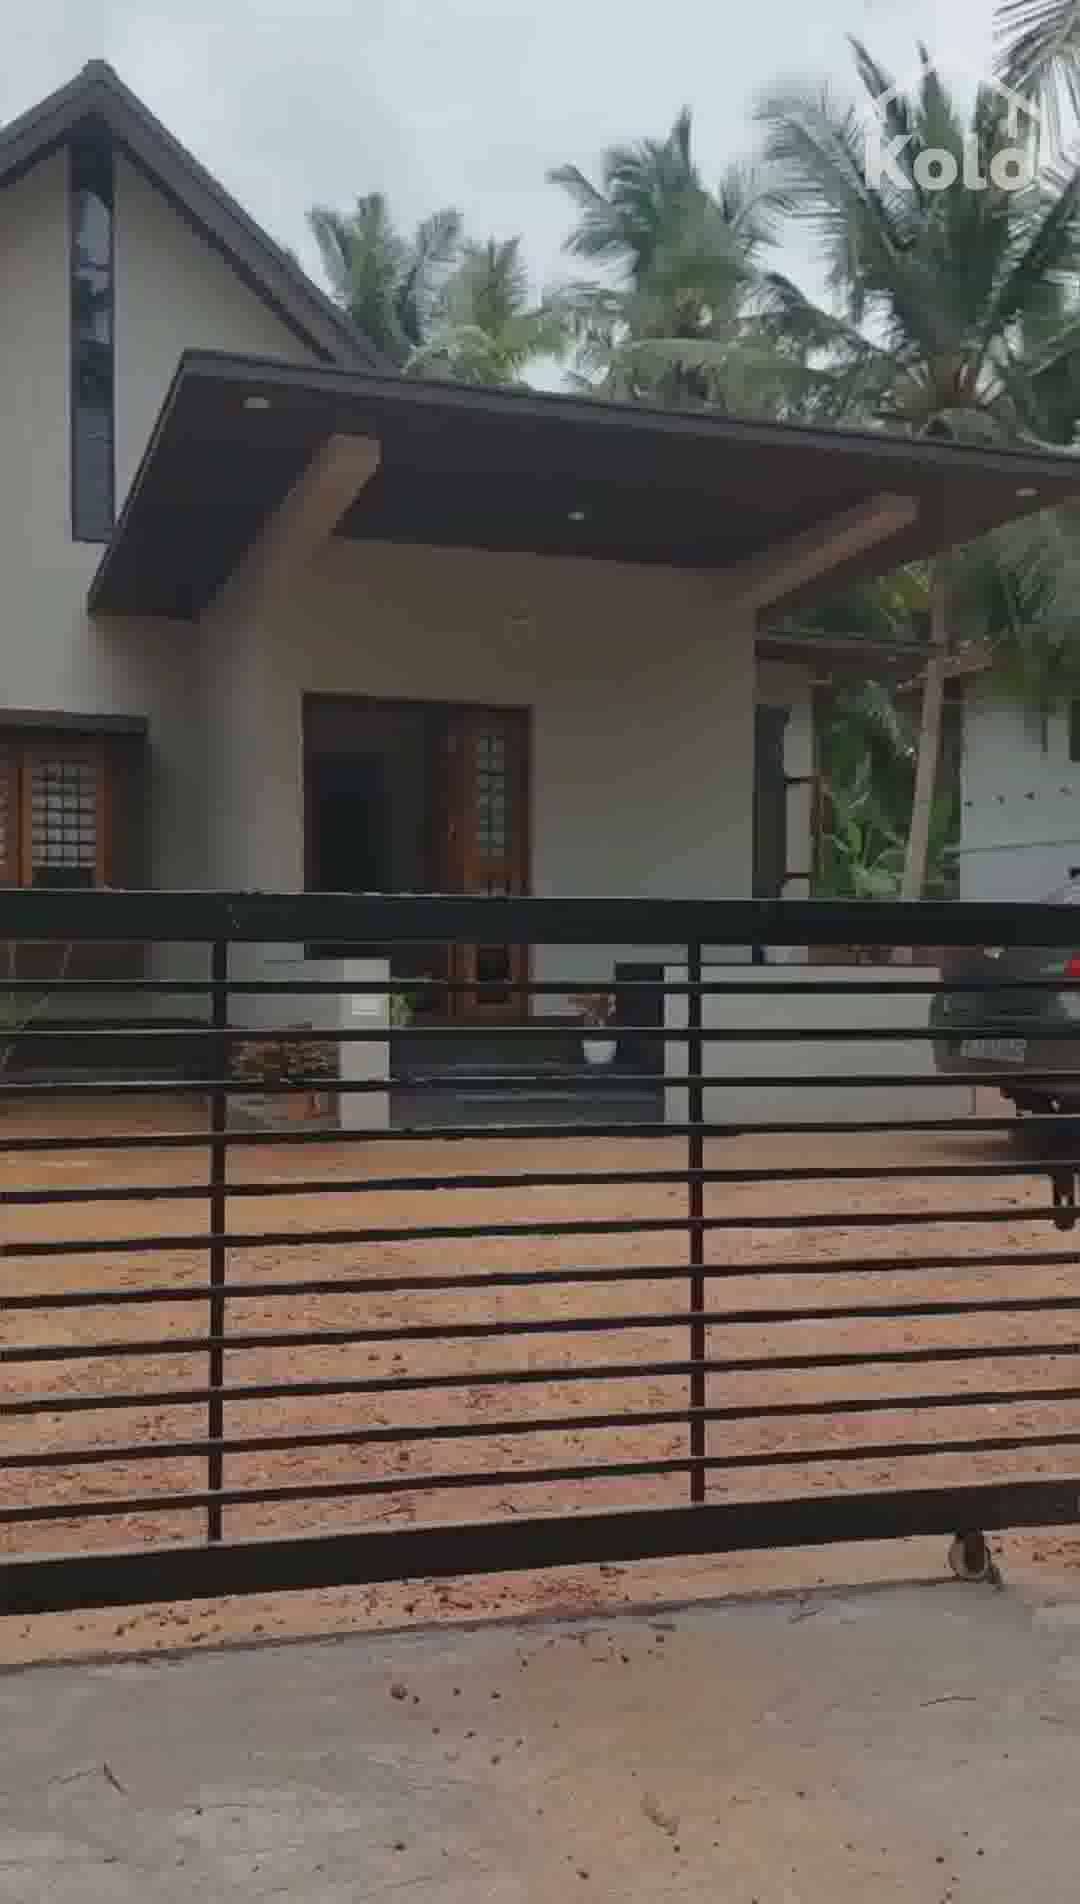 Traditional House | Kasargod

Design: CANOPY COMPANY
Architect
Kannur, Kerala

Kolo App link: https://koloapp.in/posts/1628827510

Kolo - India’s Largest Home Construction Community 🏠

#home #keralahouse #residence #residencedesign #house #koloapp #keralagram #reelitfeelit #keralagodsowncountry #homedecor #homedesign #keralahomedesignz #keralavibes #instagood #interiordesign #interior #interiordesigner #homedecoration #homedesignideas #keralahomes #homedecor #homes #traditional #kerala #homesweethome #architecturedesign #architecture #keralaarchitecture